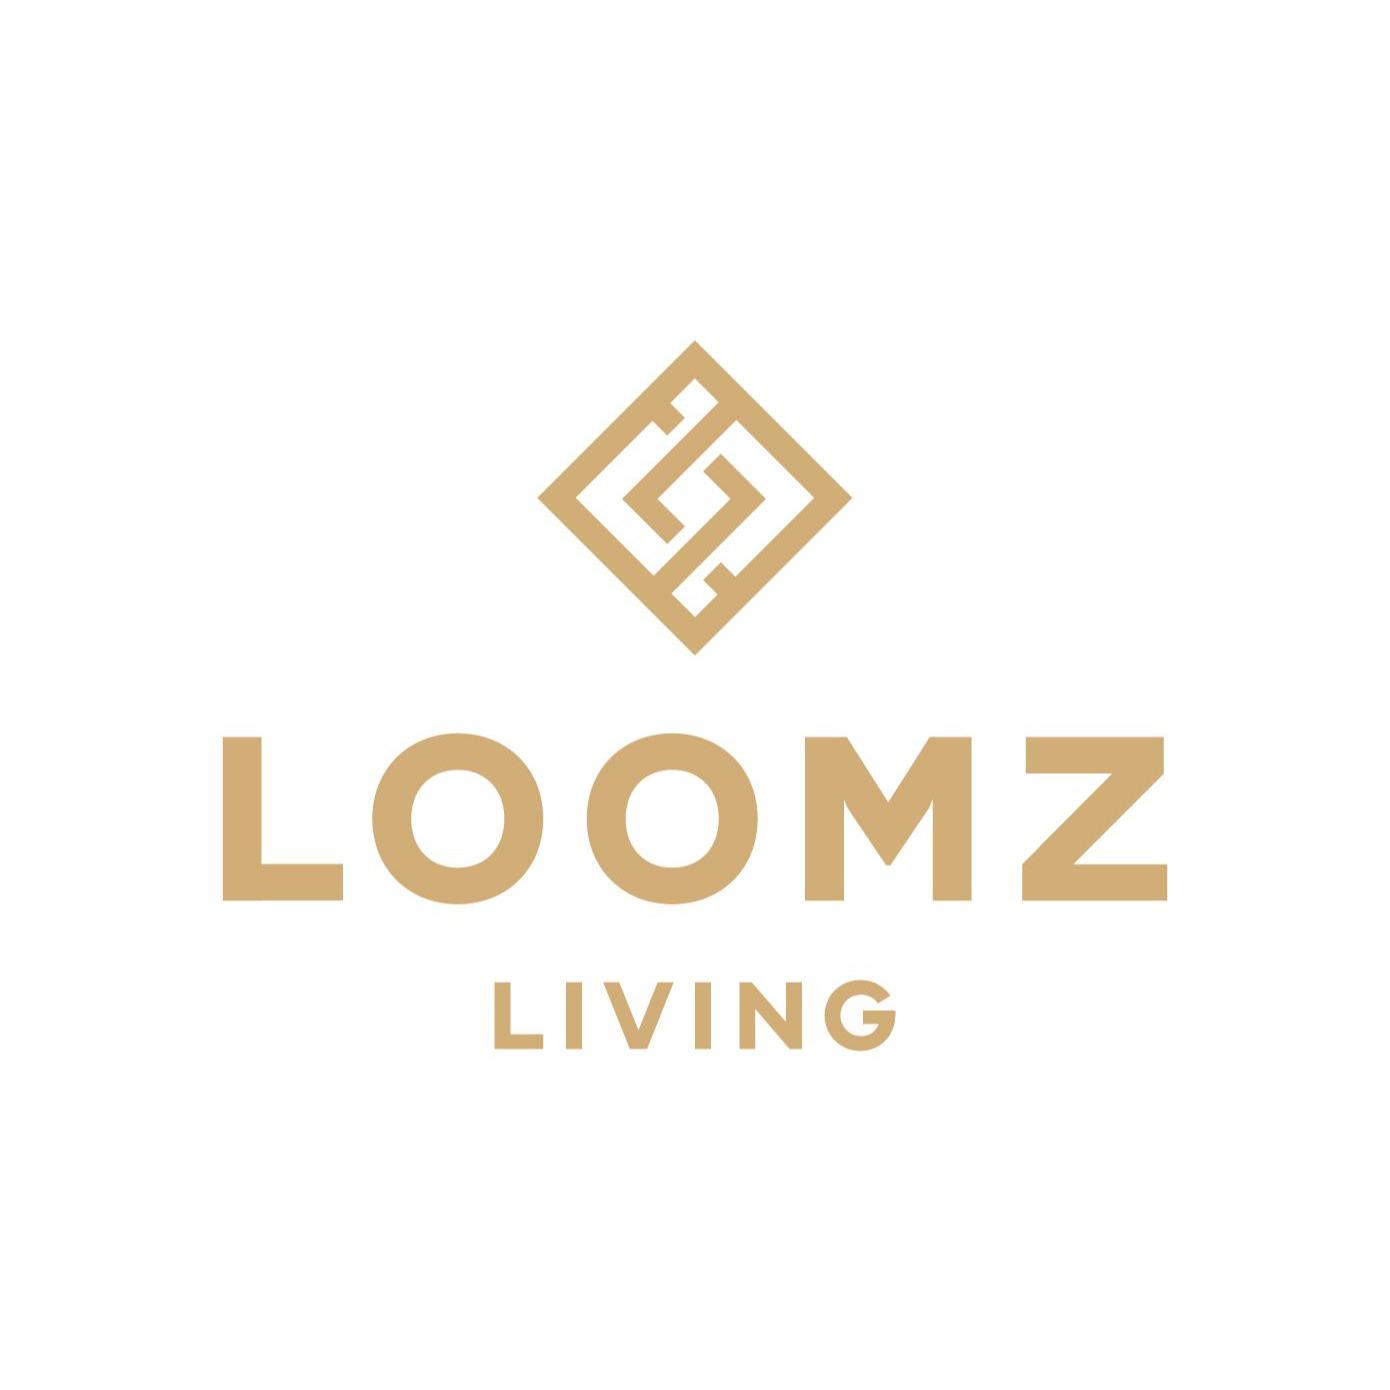 Loomz living - Aparthotel Innsbruck Loomz living - Aparthotel Innsbruck Innsbruck 0676 5071605